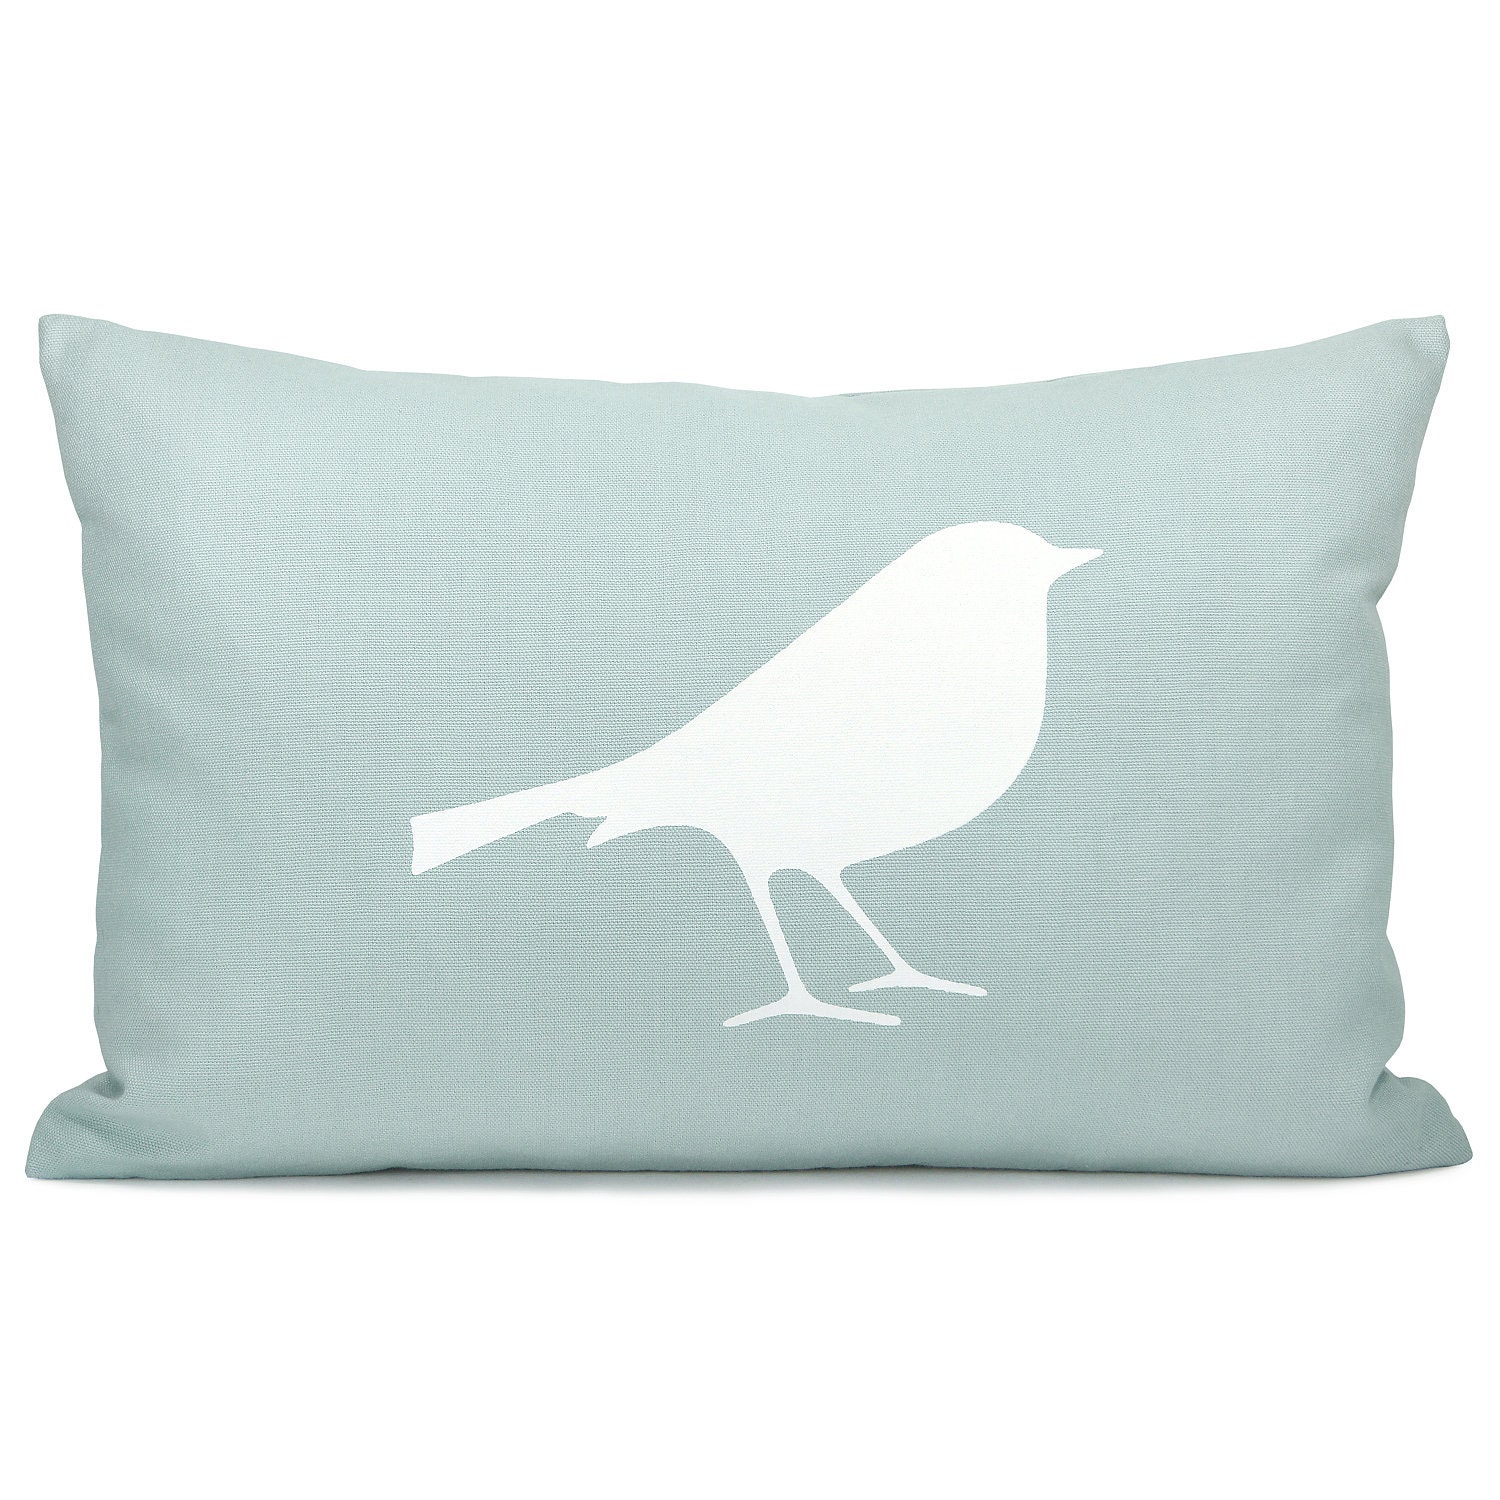 Bird pillow cover - White bird print on aquamarine blue cotton fabric decorative pillow case - 12x18 pillow cover - ClassicByNature